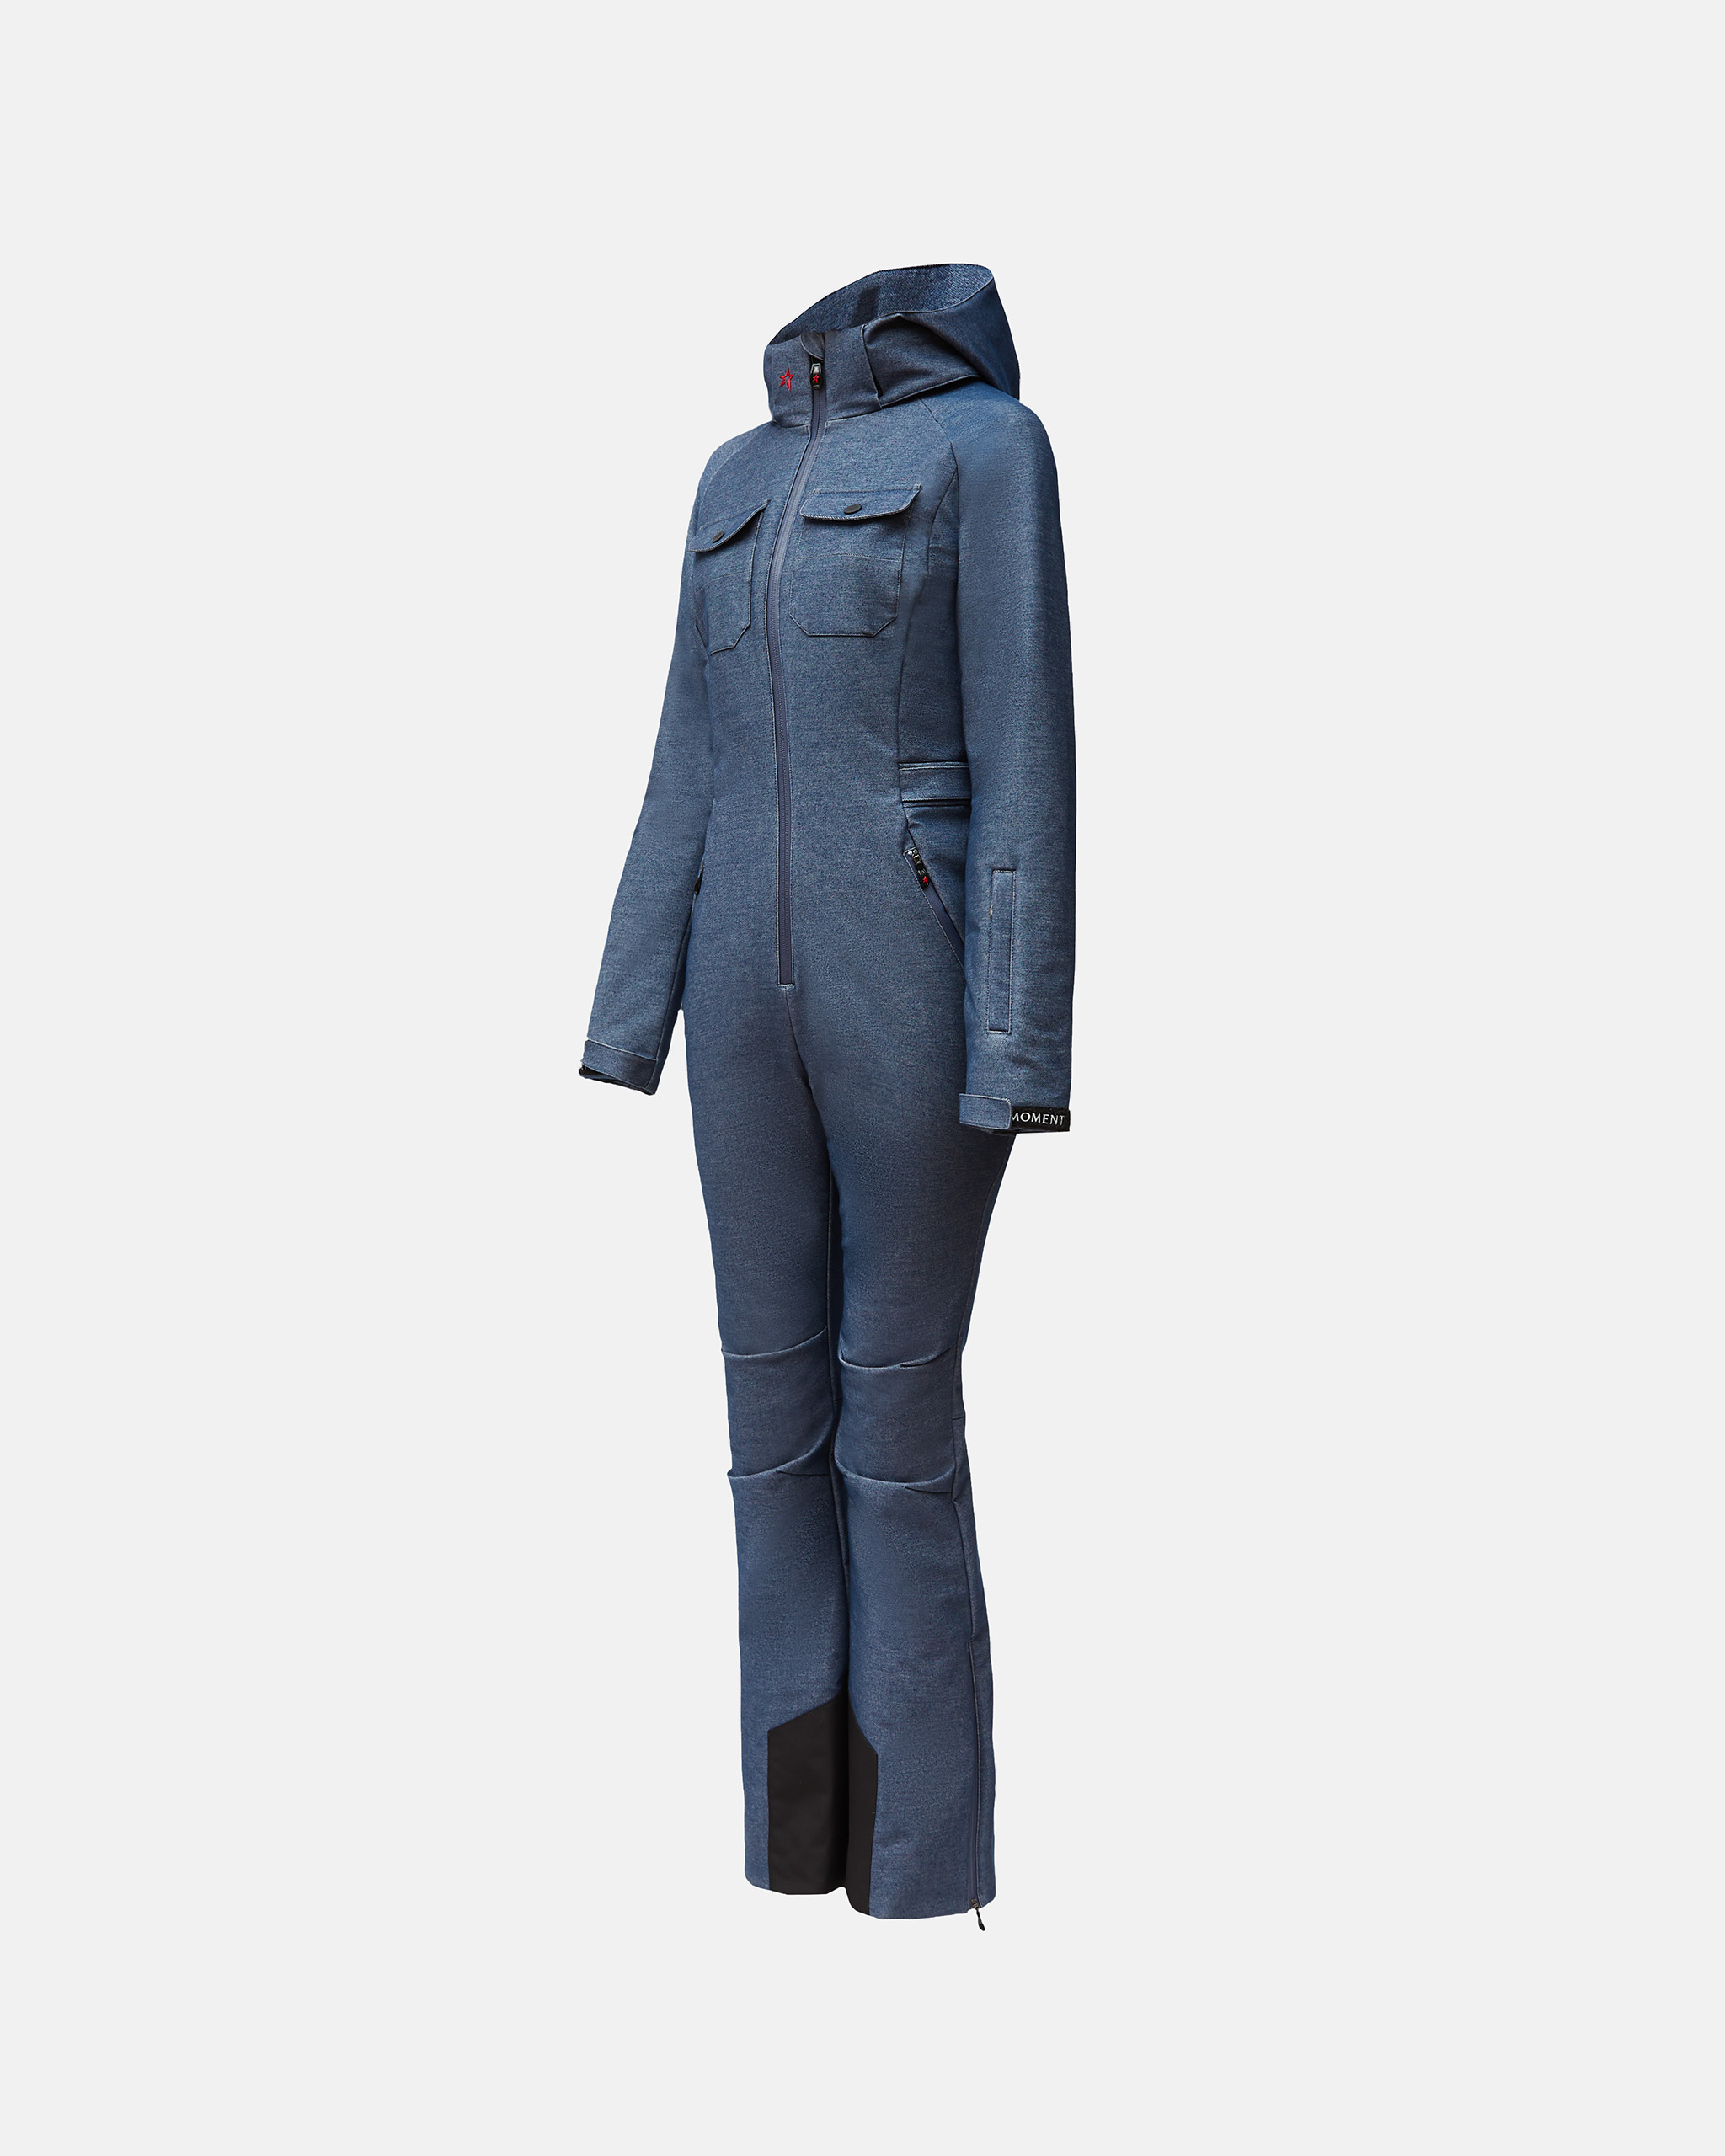 Womens Jumpsuit Denim Boiler Suit Blue Size 6 10 12 14 8 All in One Catsuit  | eBay